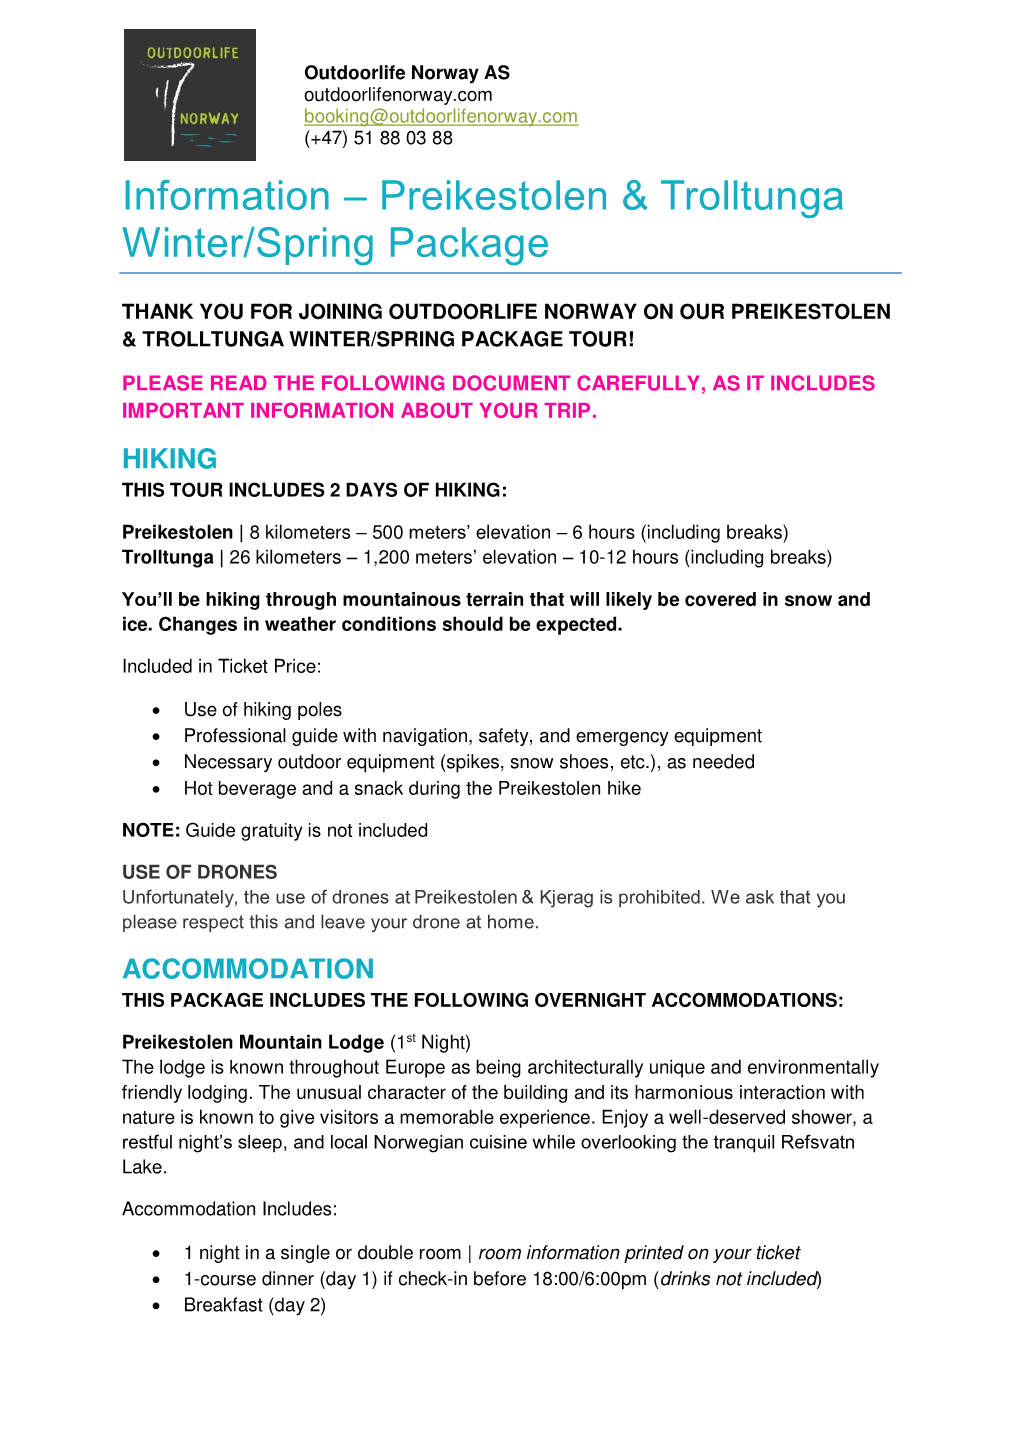 Preikestolen & Trolltunga Winter/Spring Package